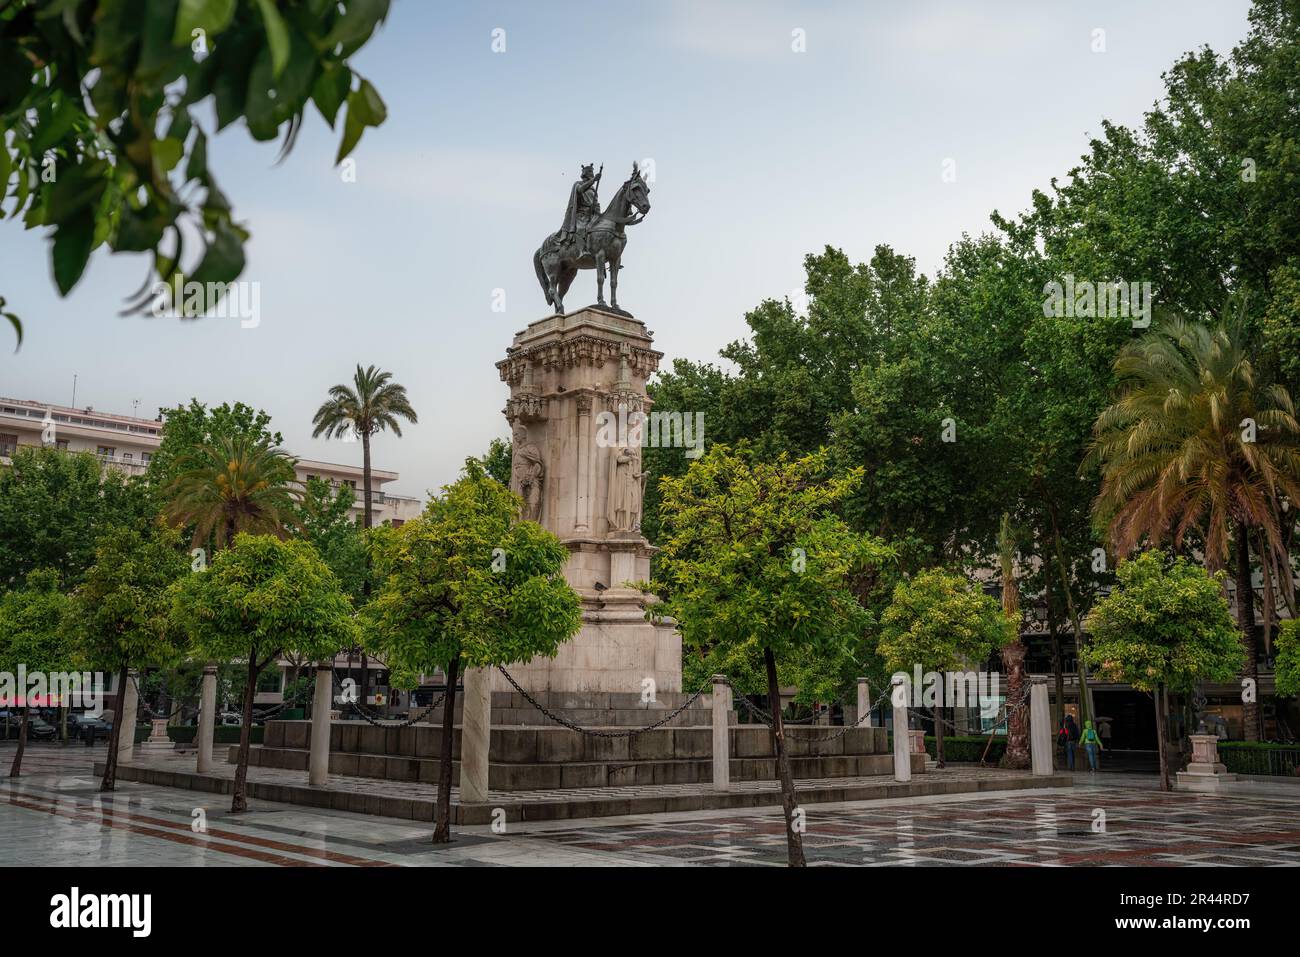 San Fernando Monument at Plaza Nueva Square - Seville, Andalusia, Spain Stock Photo